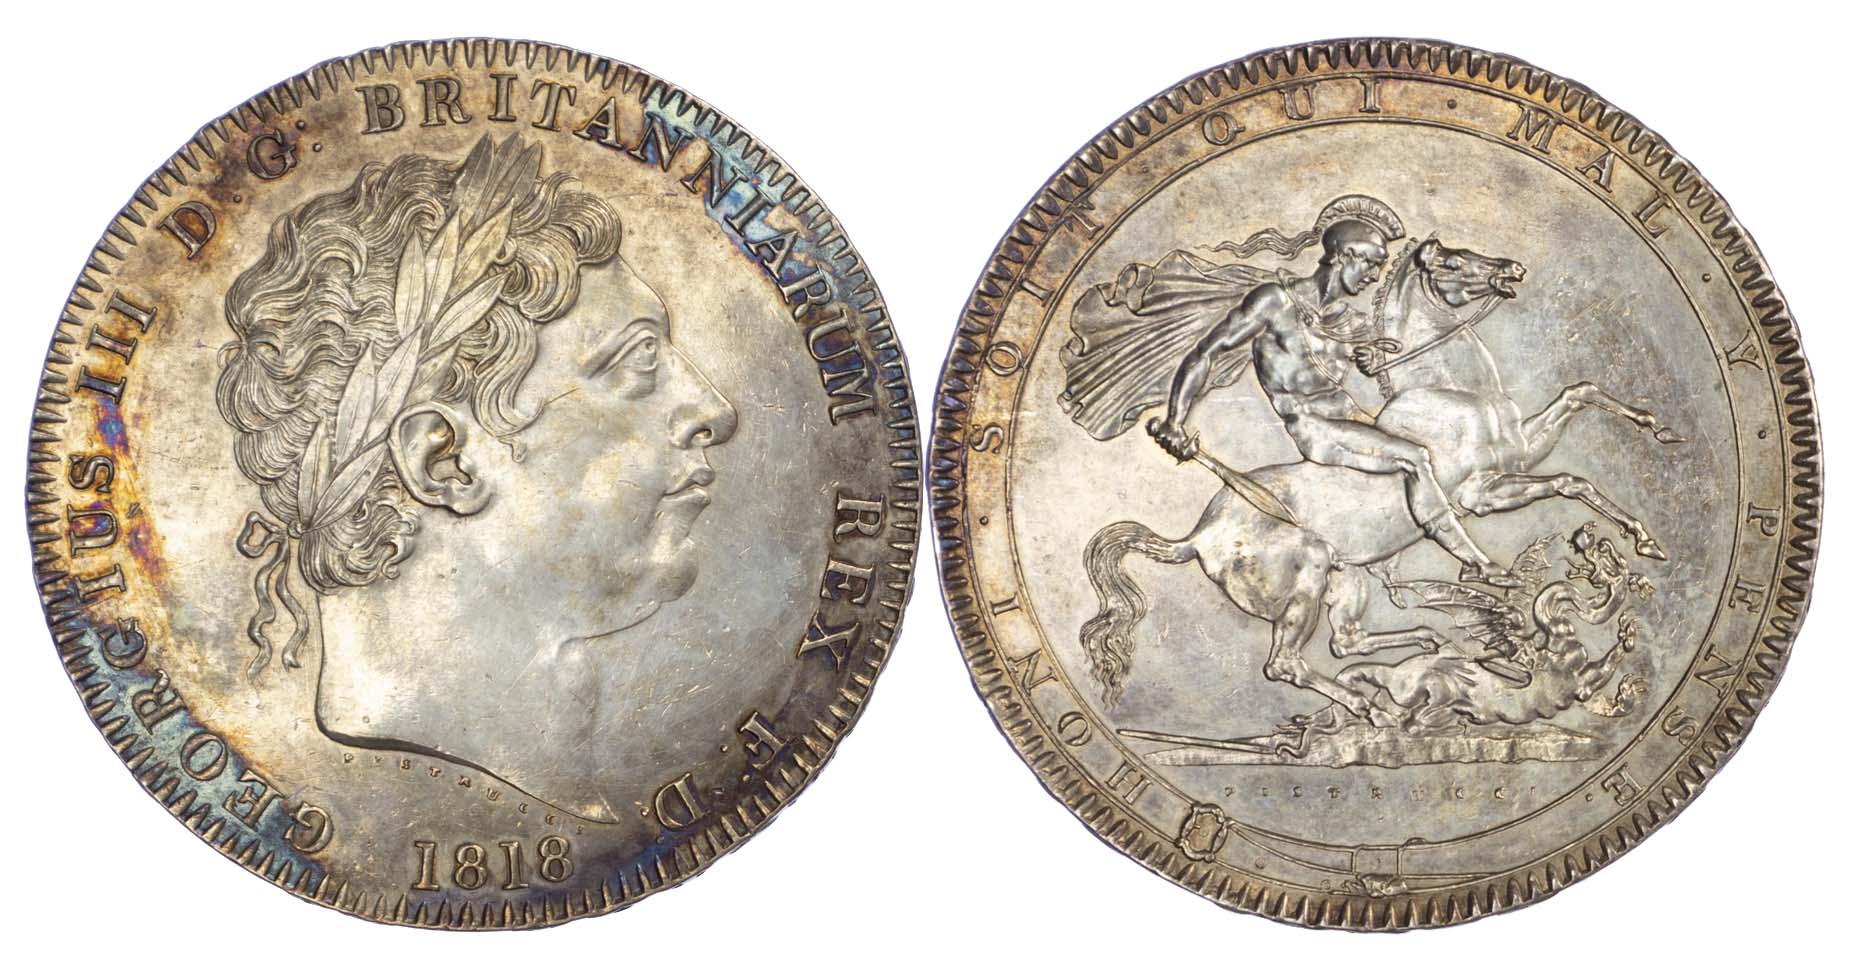 George III (1760-1820), 1818 LIX Crown